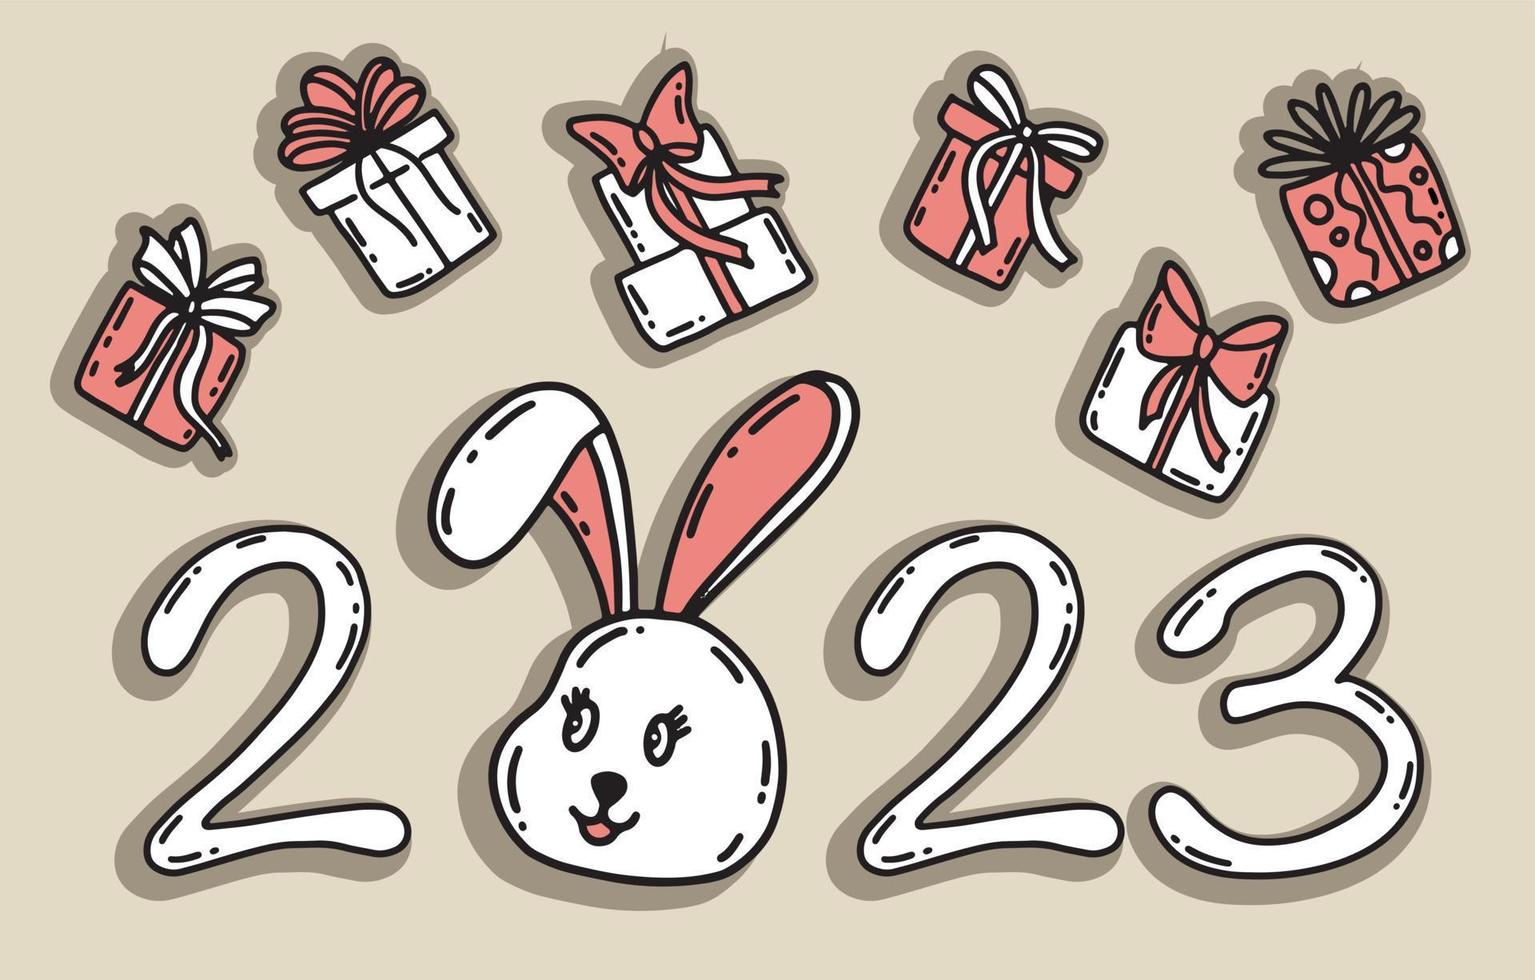 2023 new year. Rabbit head cartoon vector illustration.